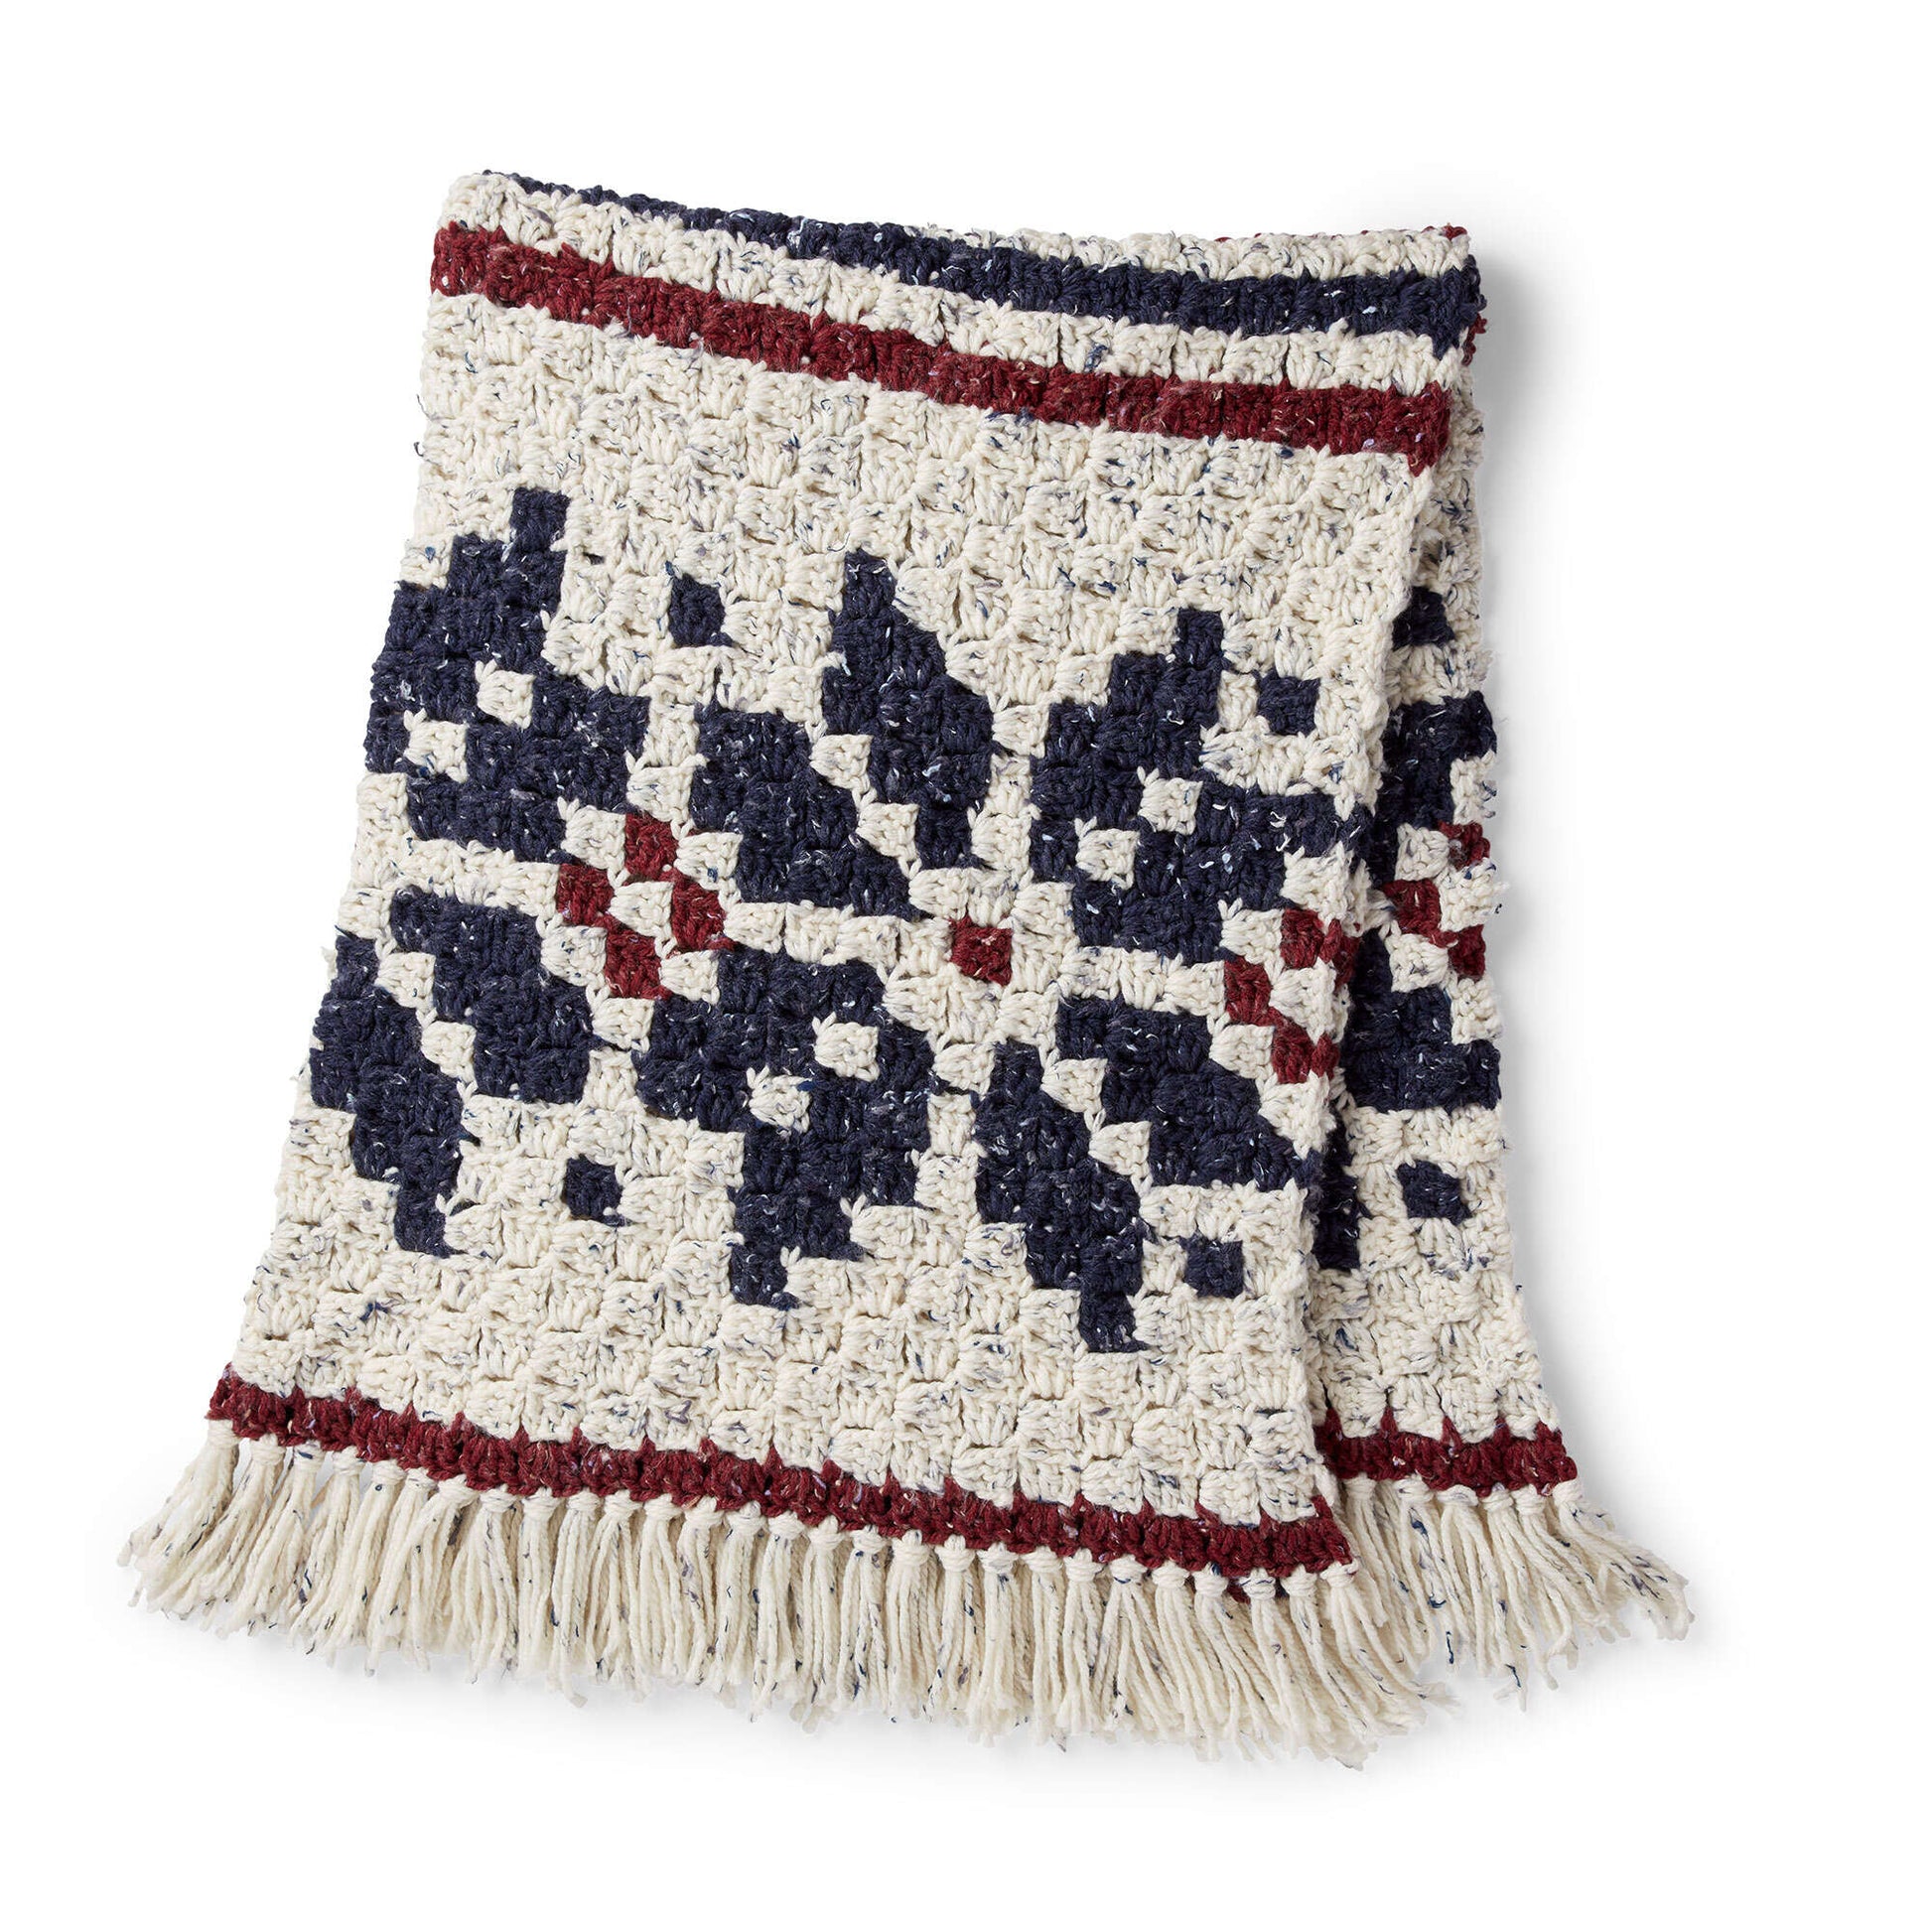 Bernat Crochet C2C Nordic Motif Blanket Crochet Blanket made in Bernat Softee Chunky Tweeds yarn